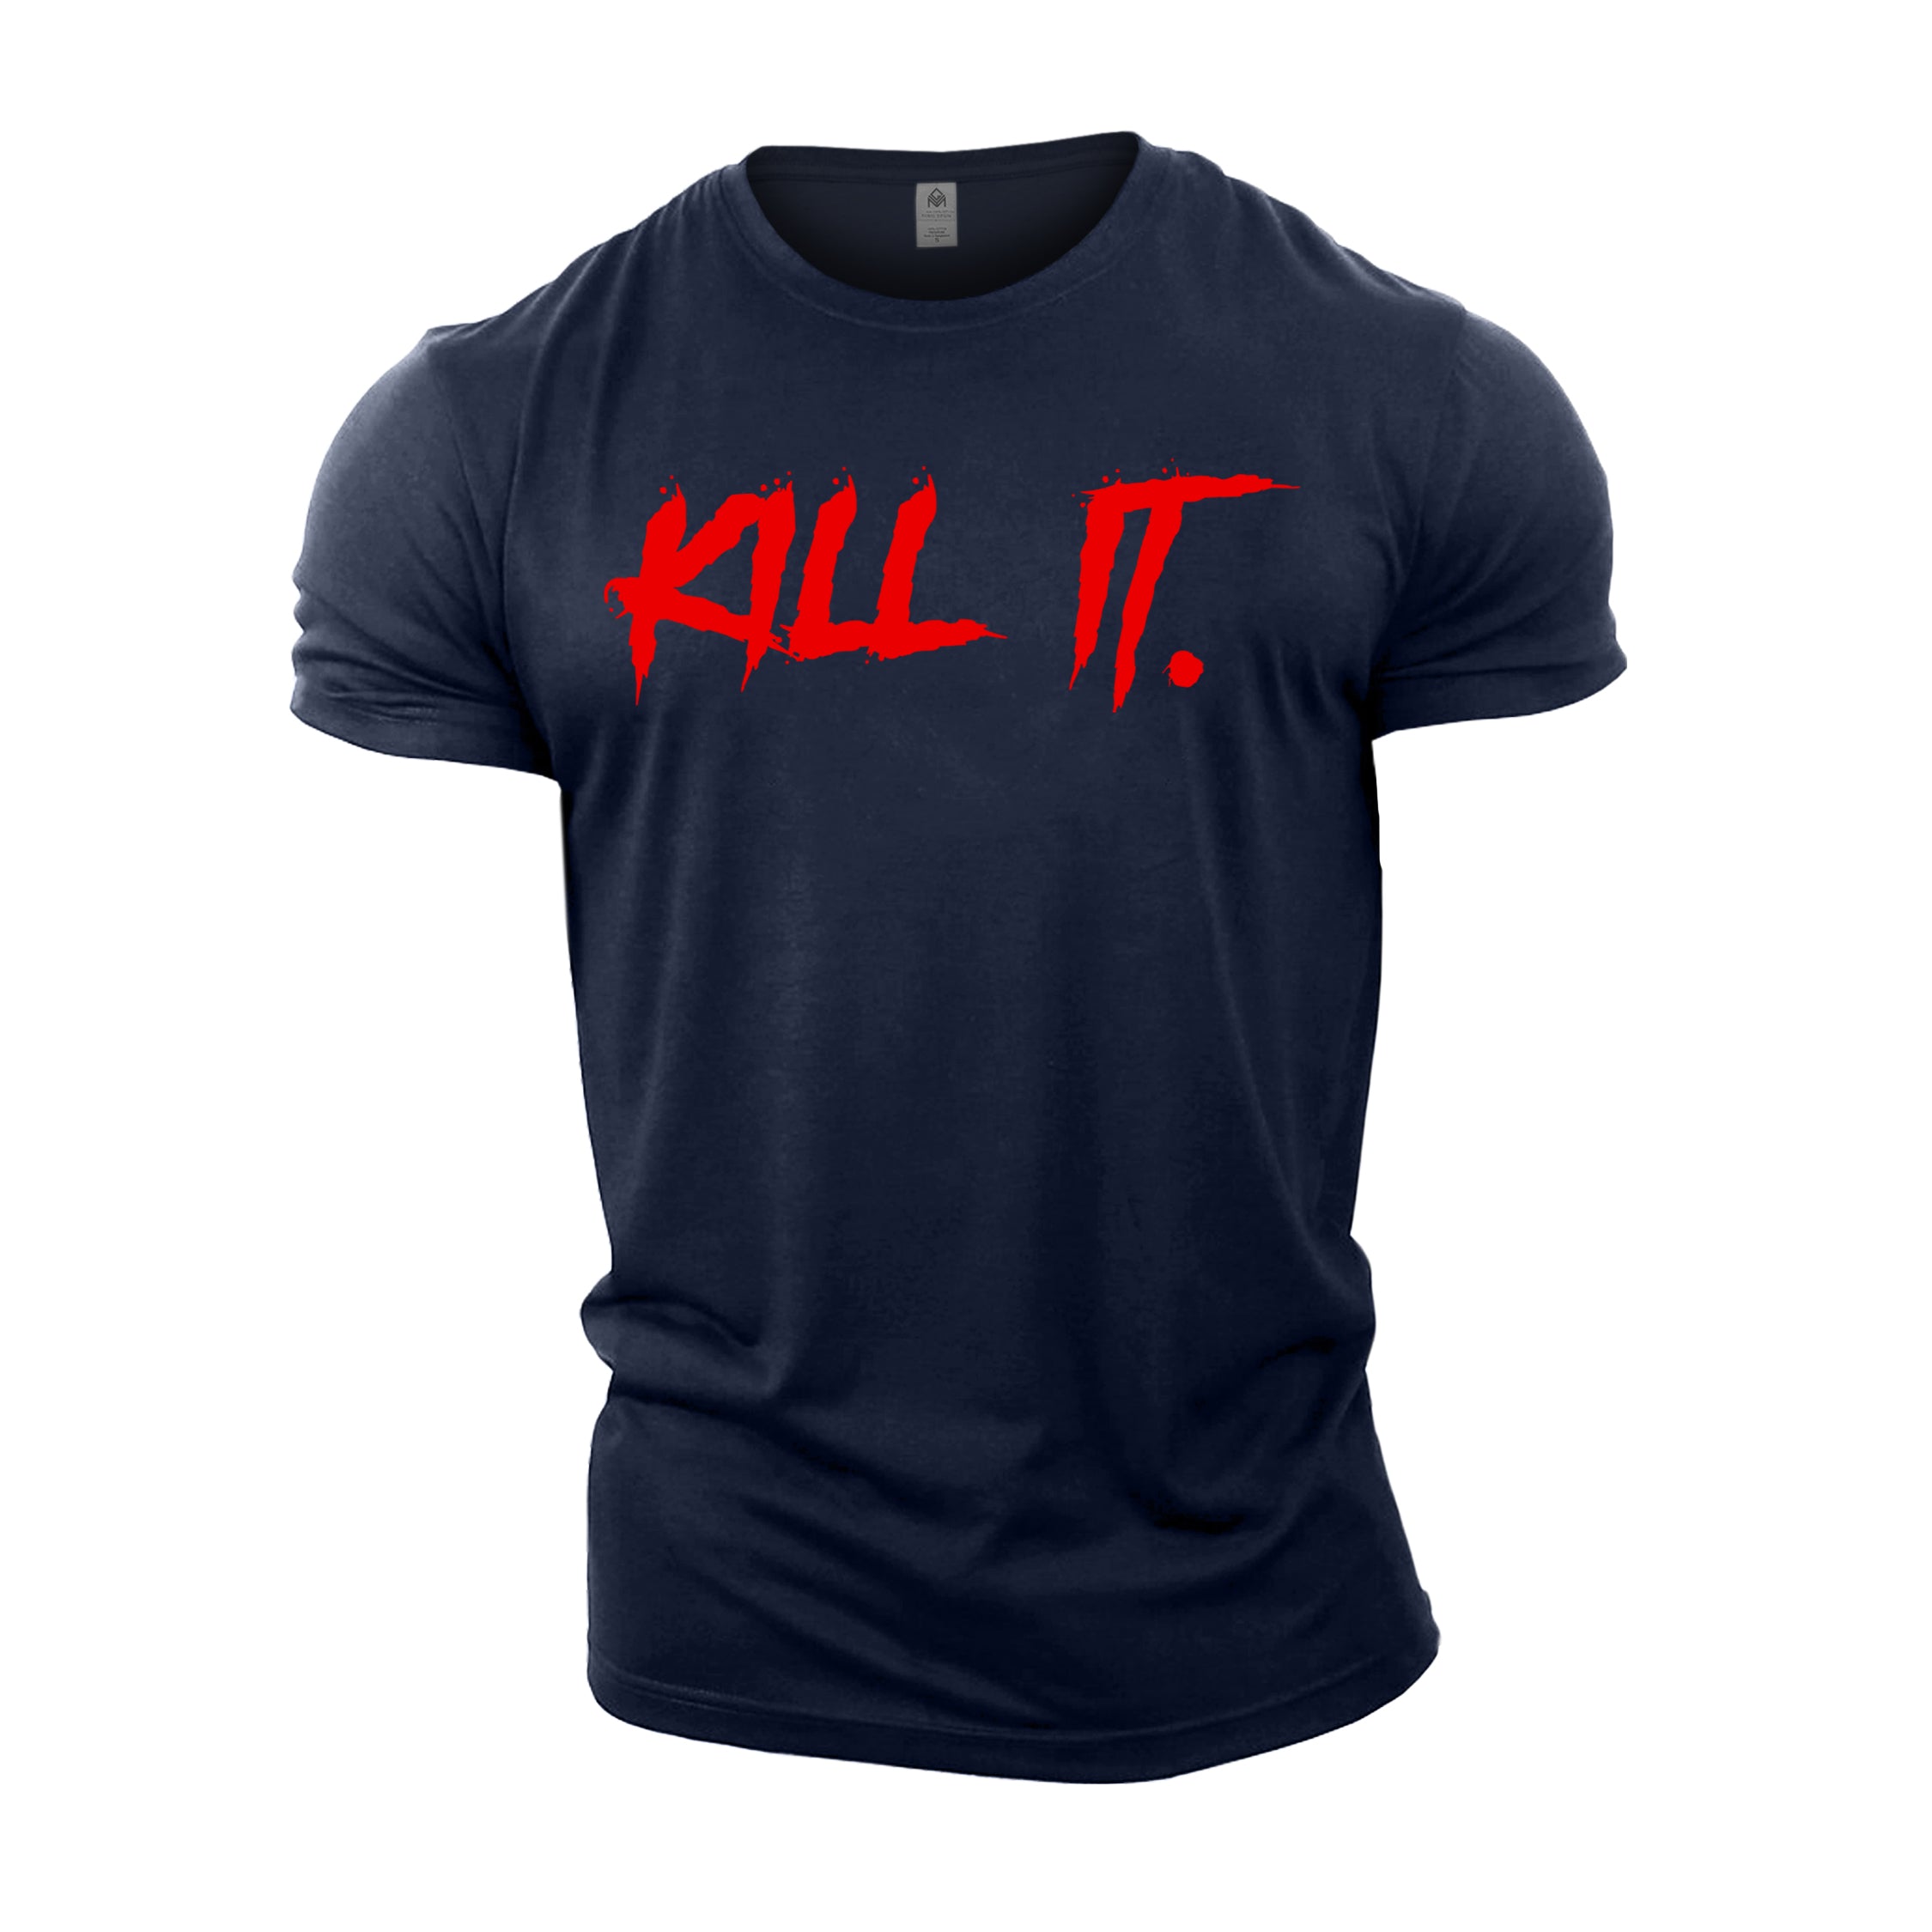 KILL IT! Blood Red  - Gym T-Shirt